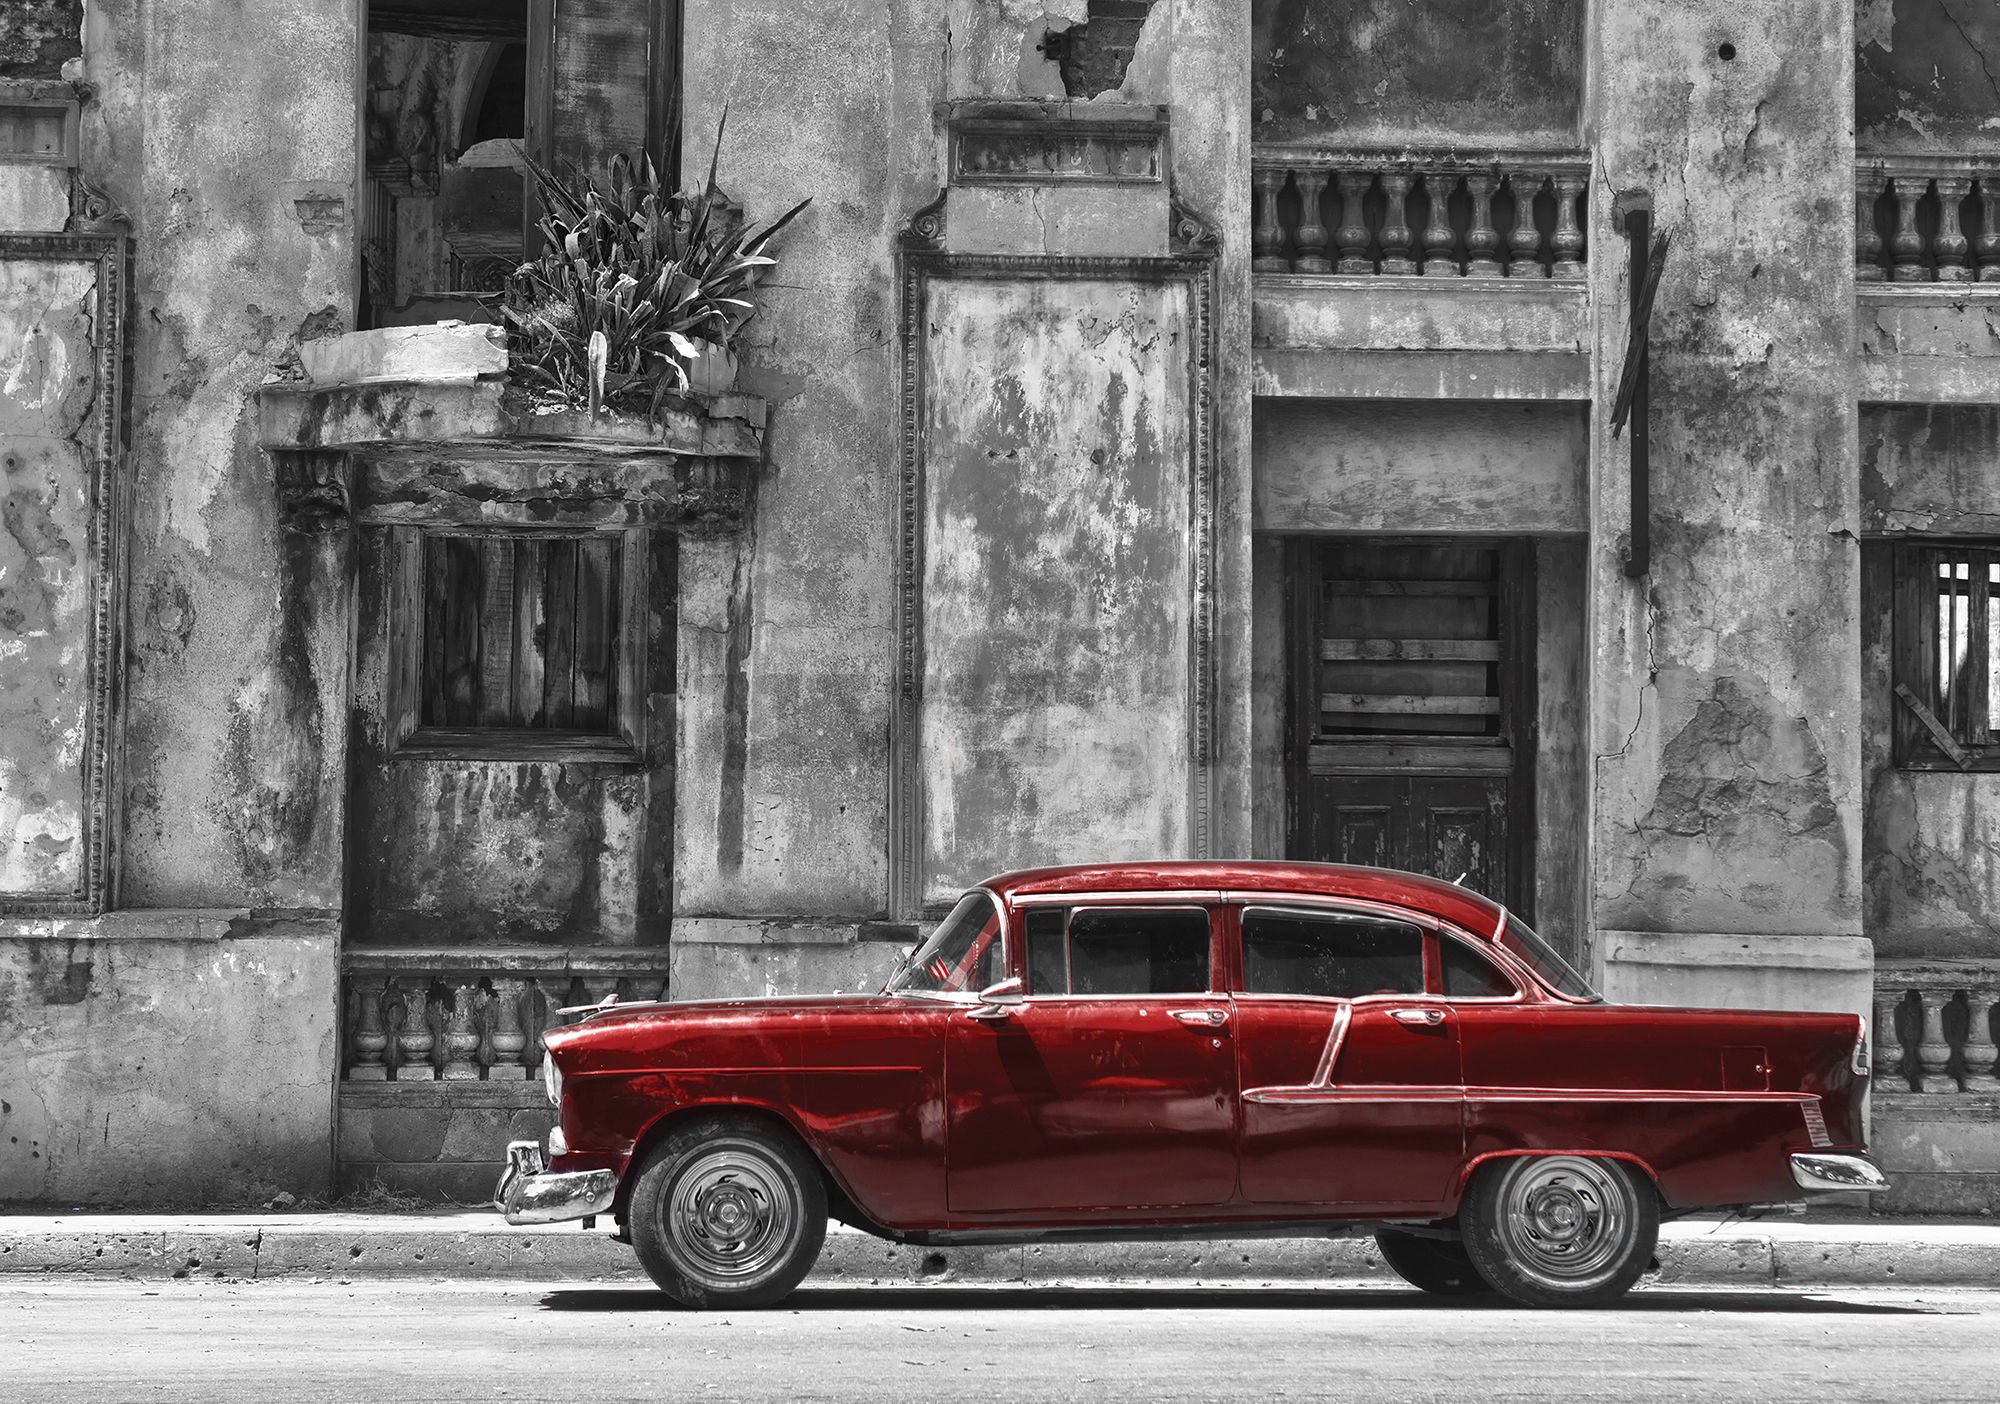 Vlies foto tapeta: Kubanski ulični crveni automobil - 208x146 cm